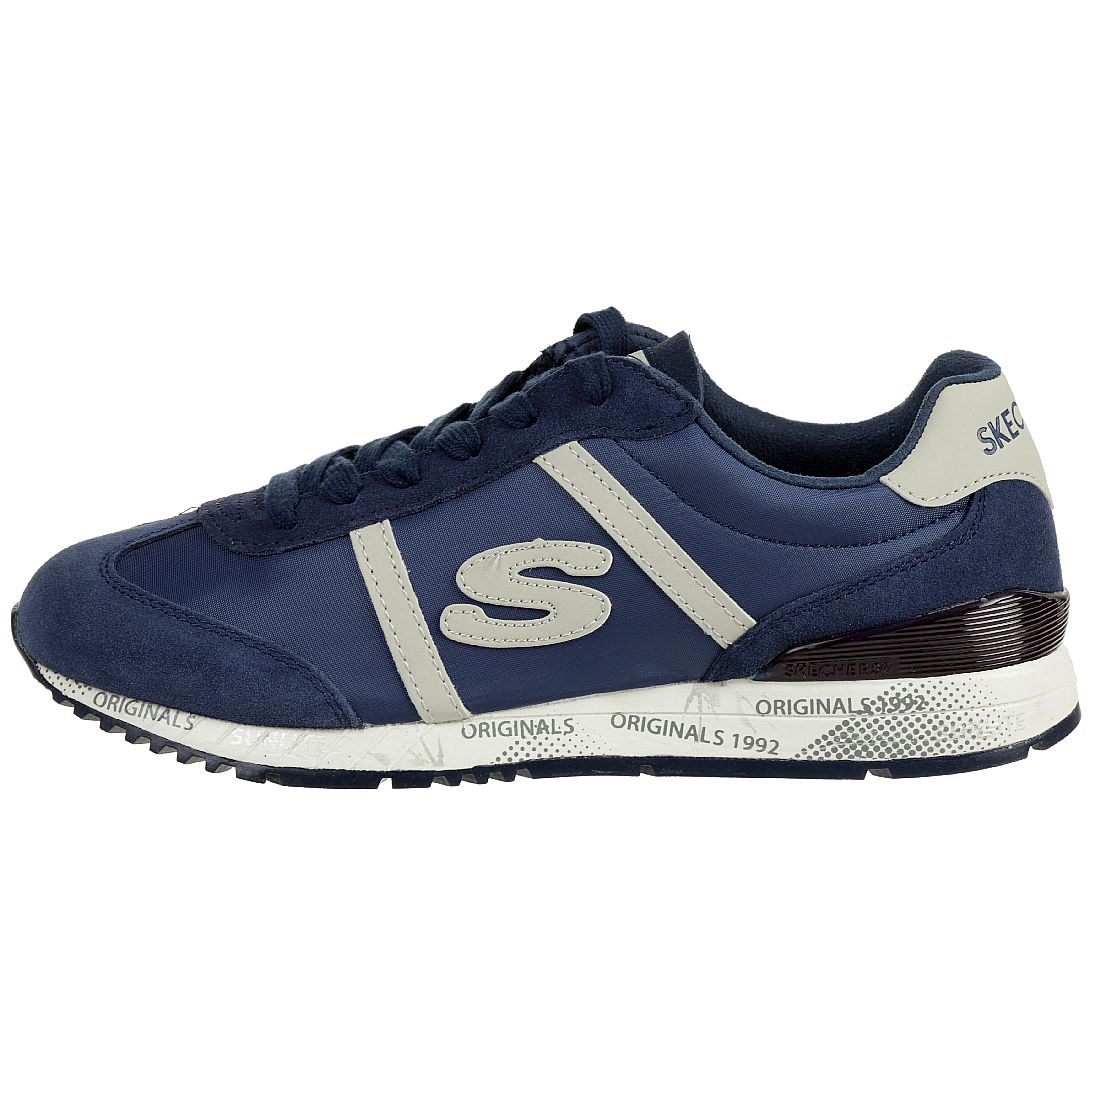 Skechers Originals 1992 Sunlite Reminise Damen Sneaker blau 911 NVY